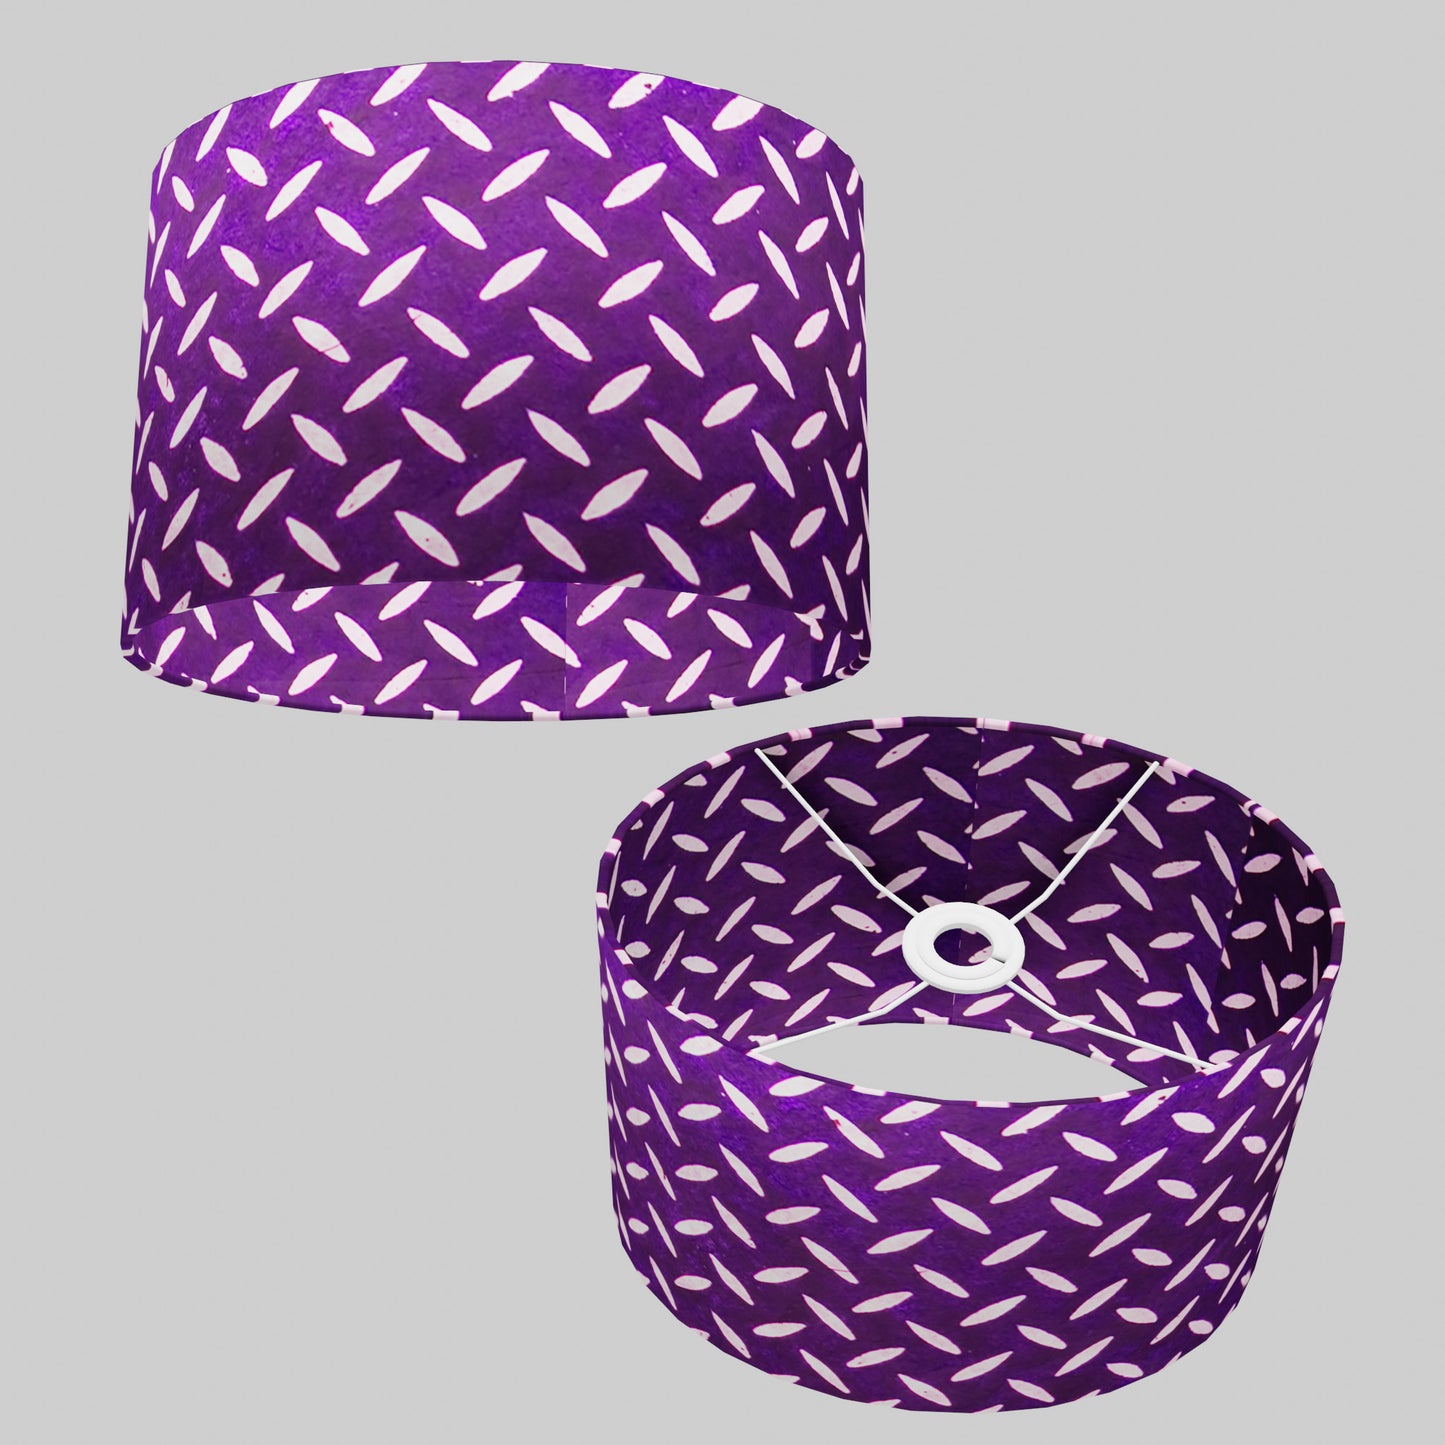 Oval Lamp Shade - P13 - Batik Tread Plate Purple, 30cm(w) x 20cm(h) x 22cm(d)